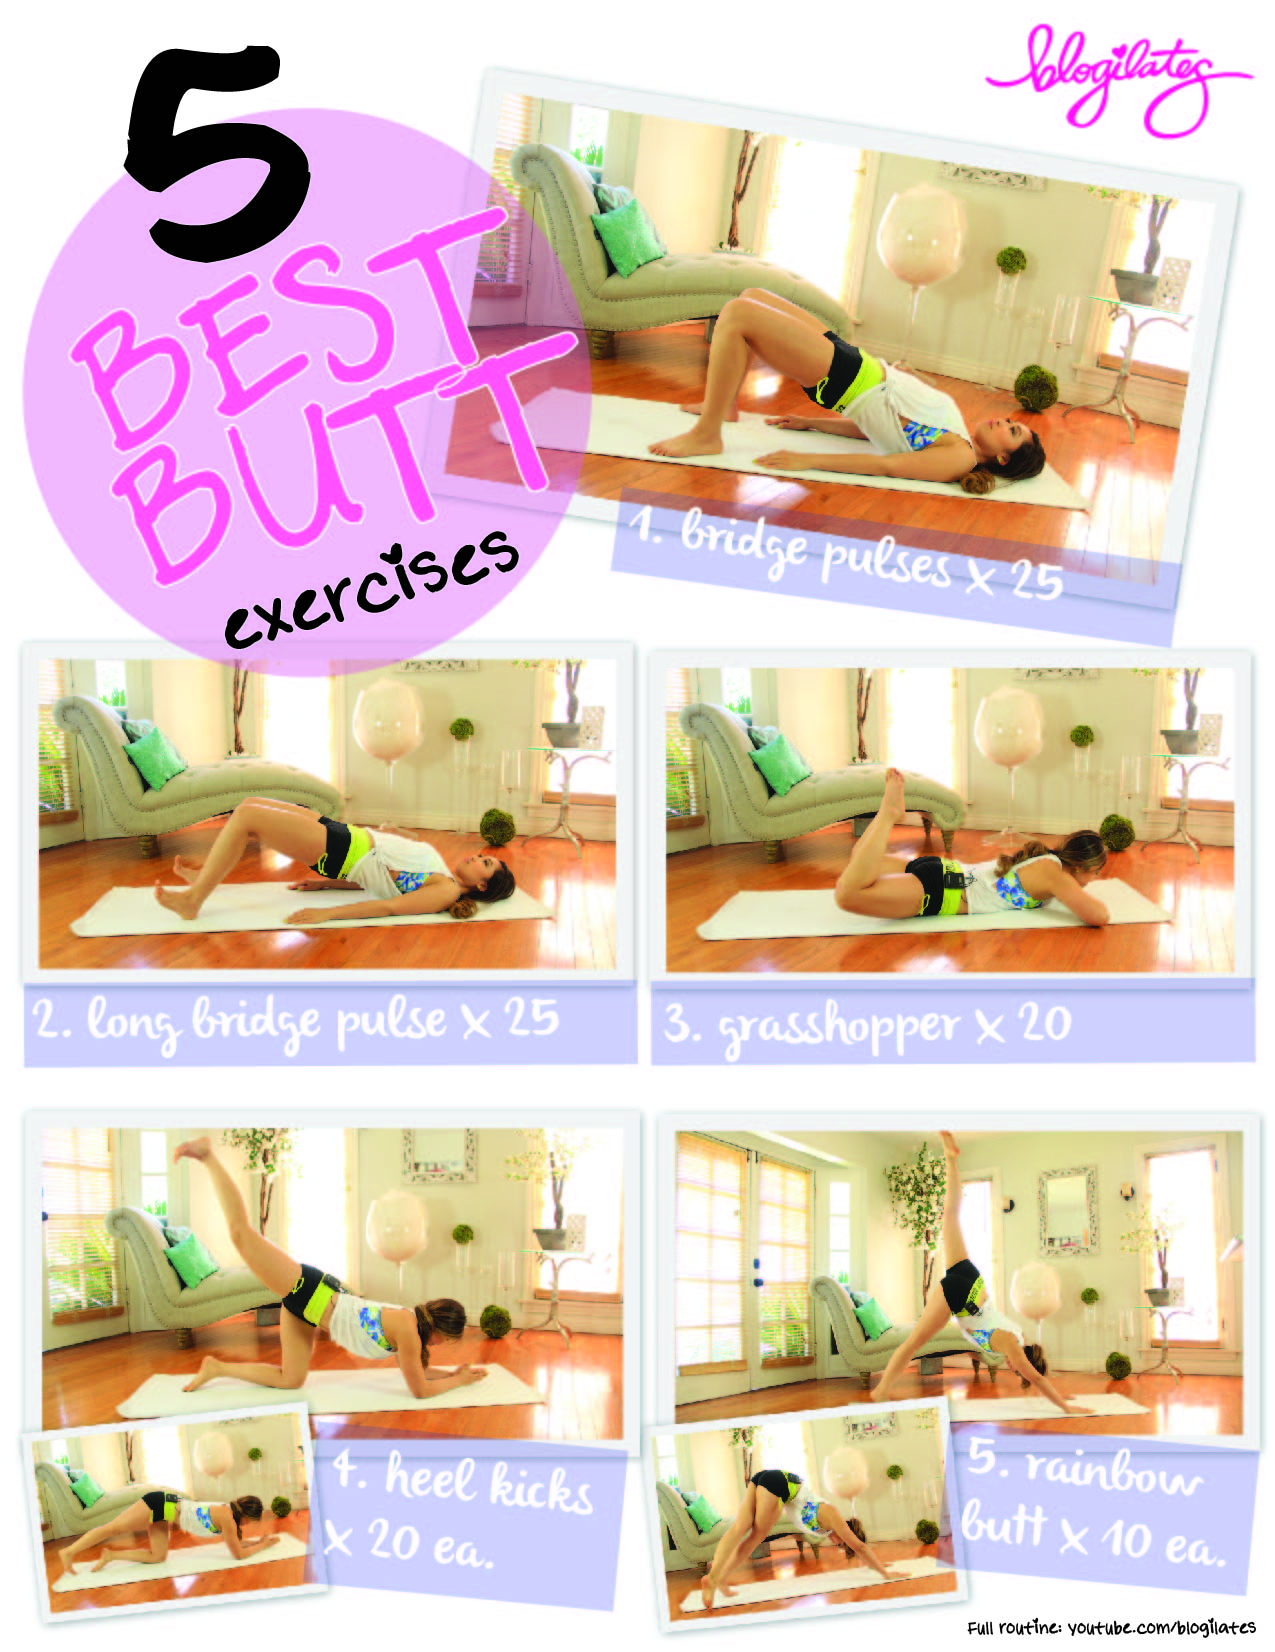 5 best butt exercises printable